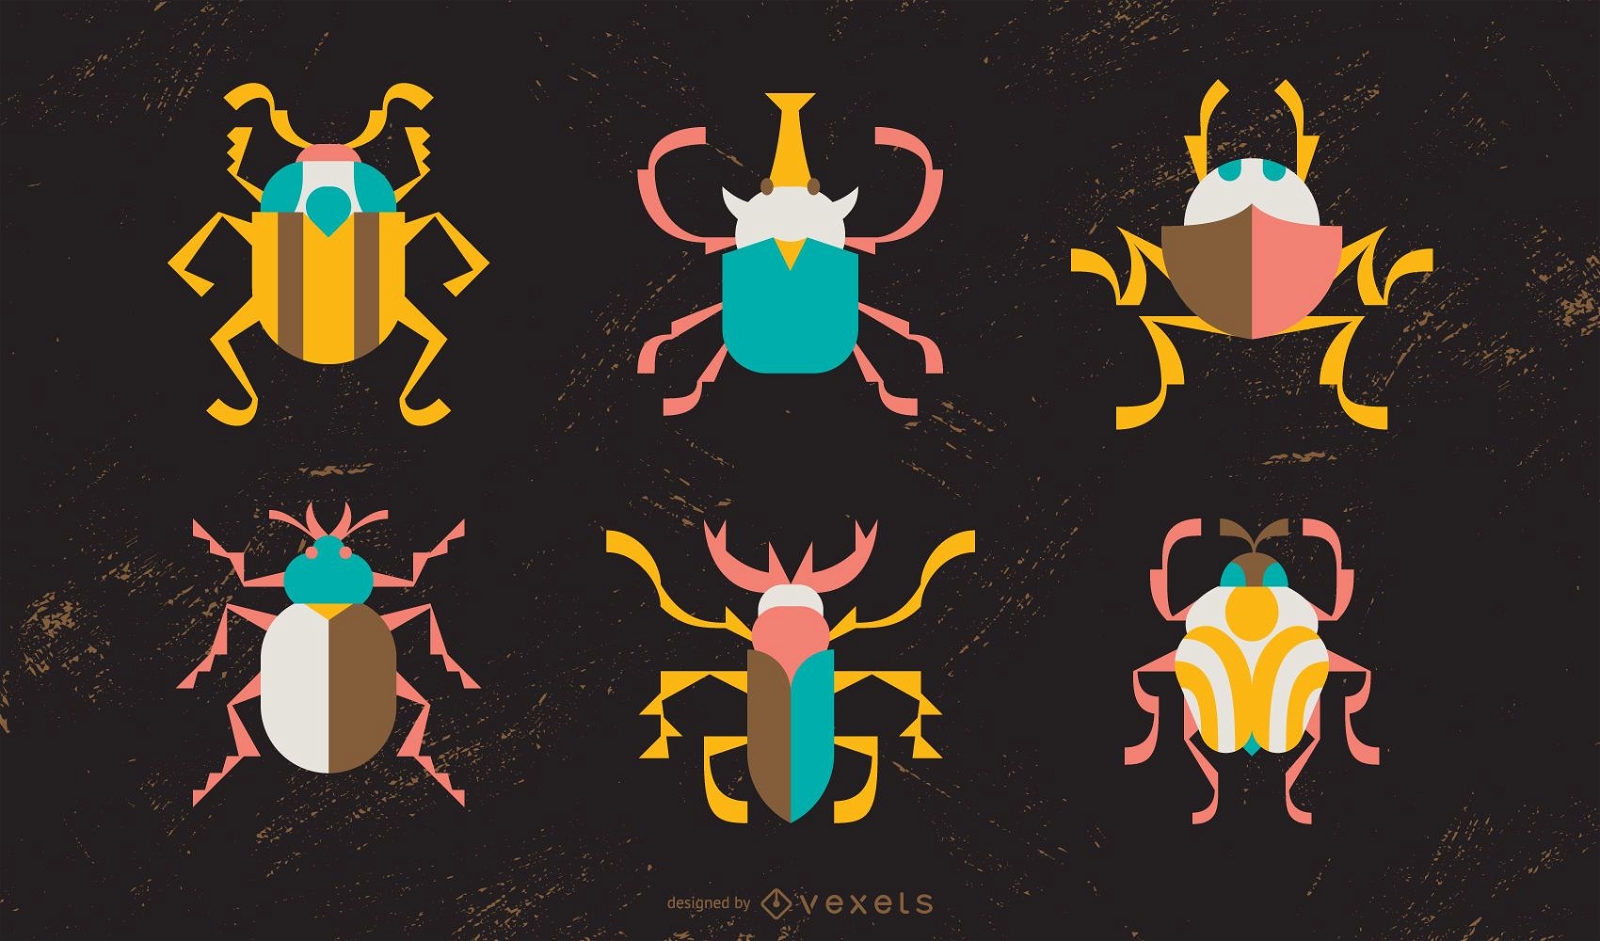 Käfer buntes Illustrationspaket